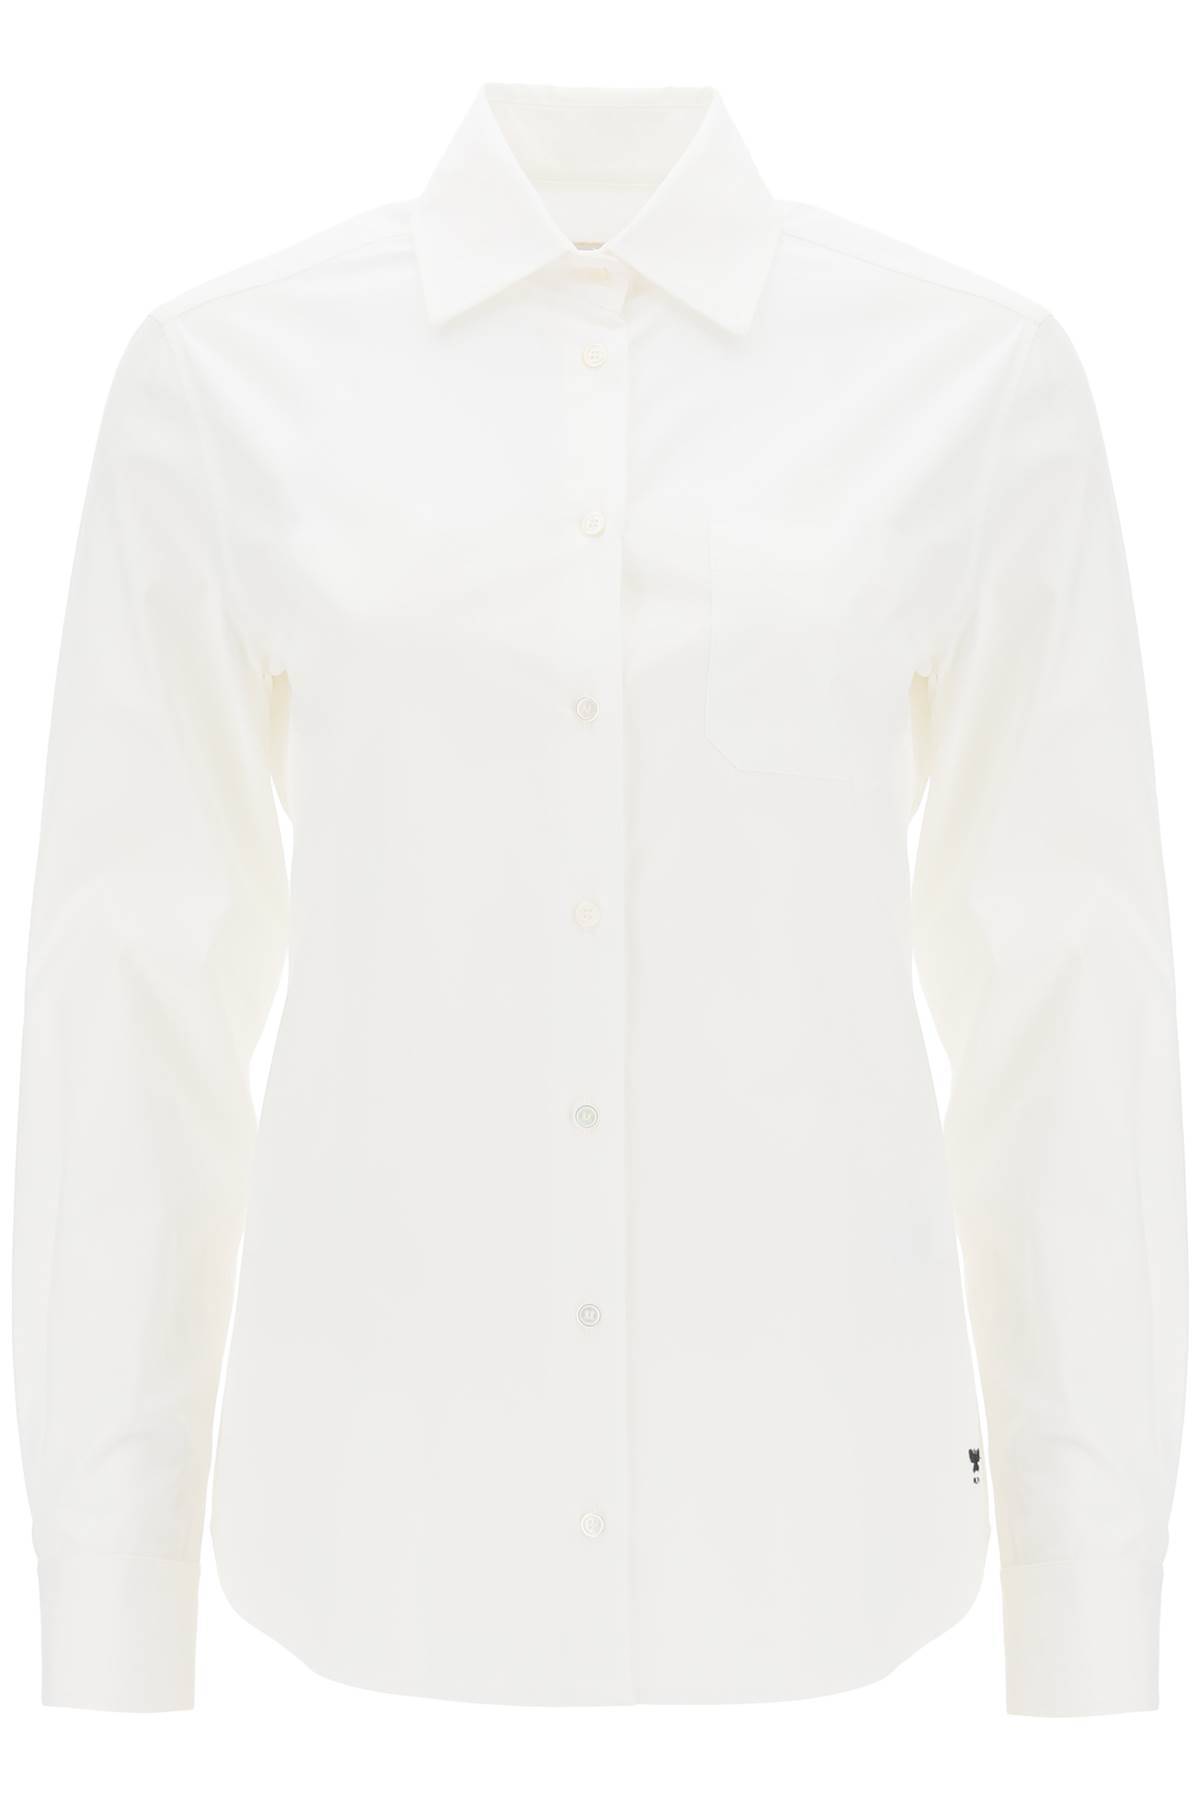 Weekend Max Mara Linen Shirt In White